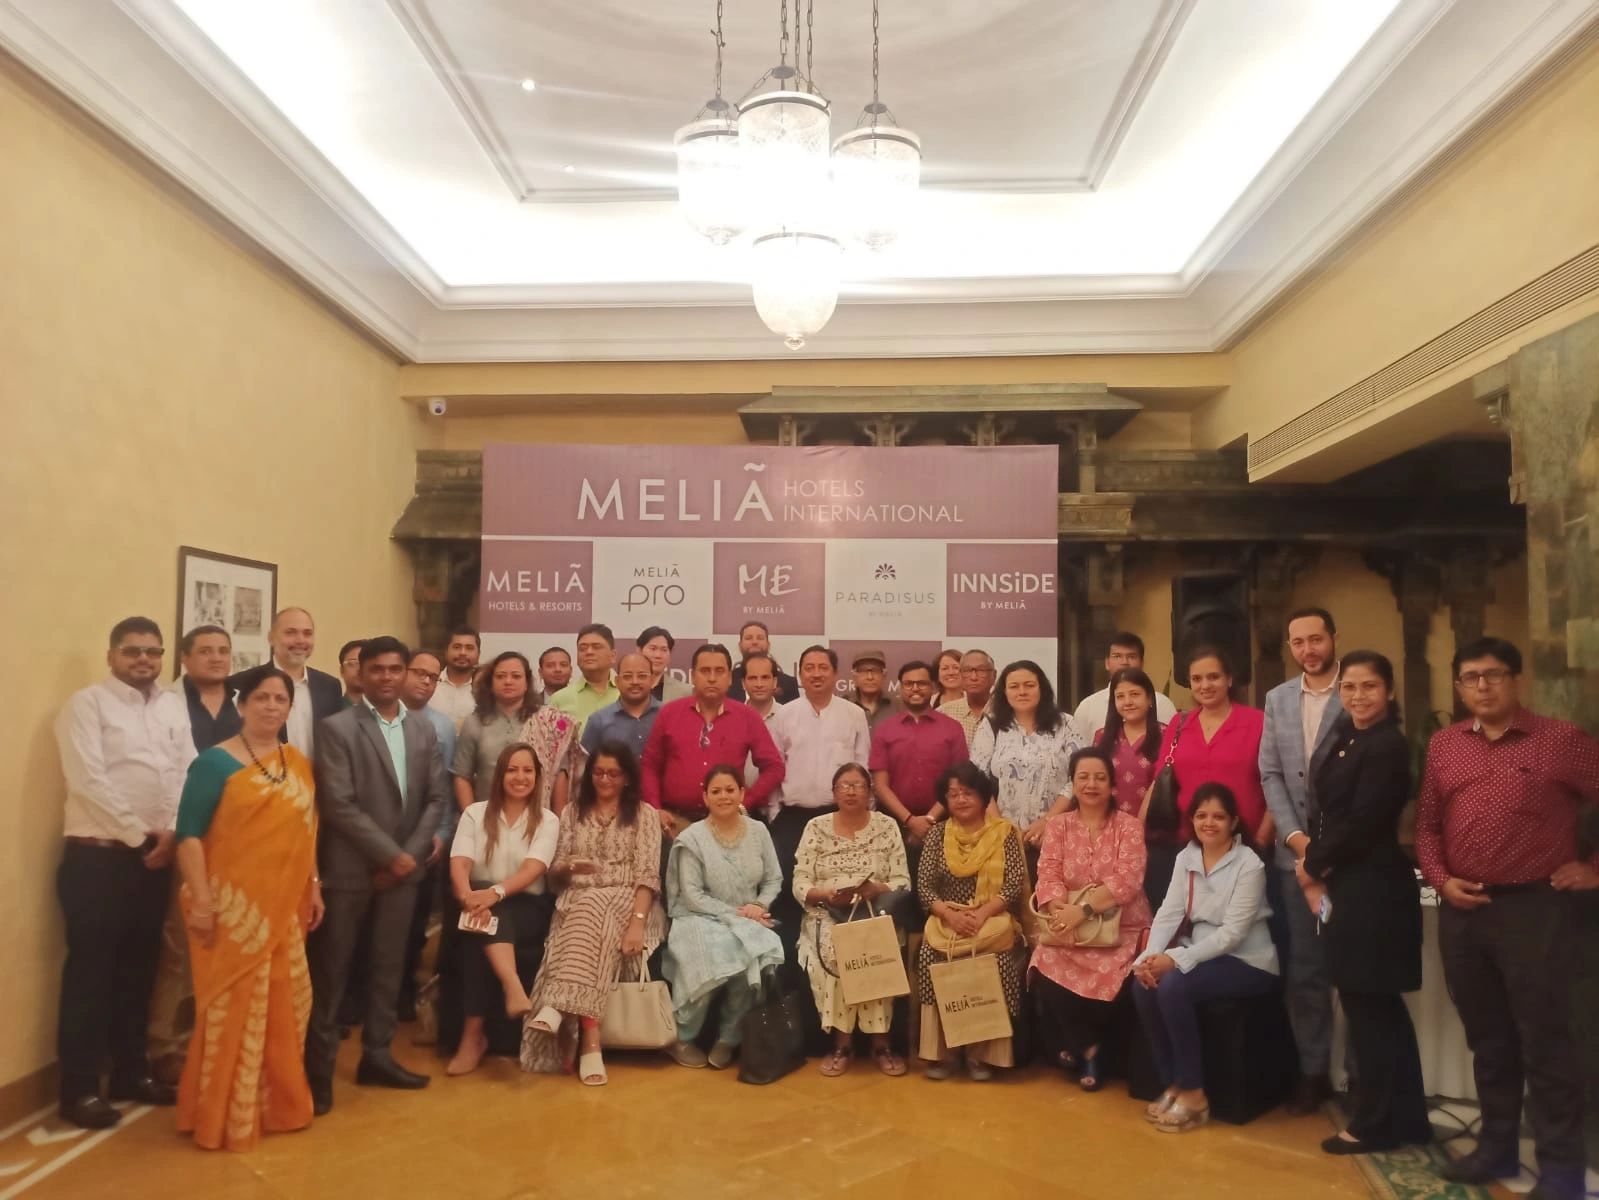 Melia Hotels International Sales Mission in 4 cities in India – Delhi, Kolkata, Bangalore and Mumbai.